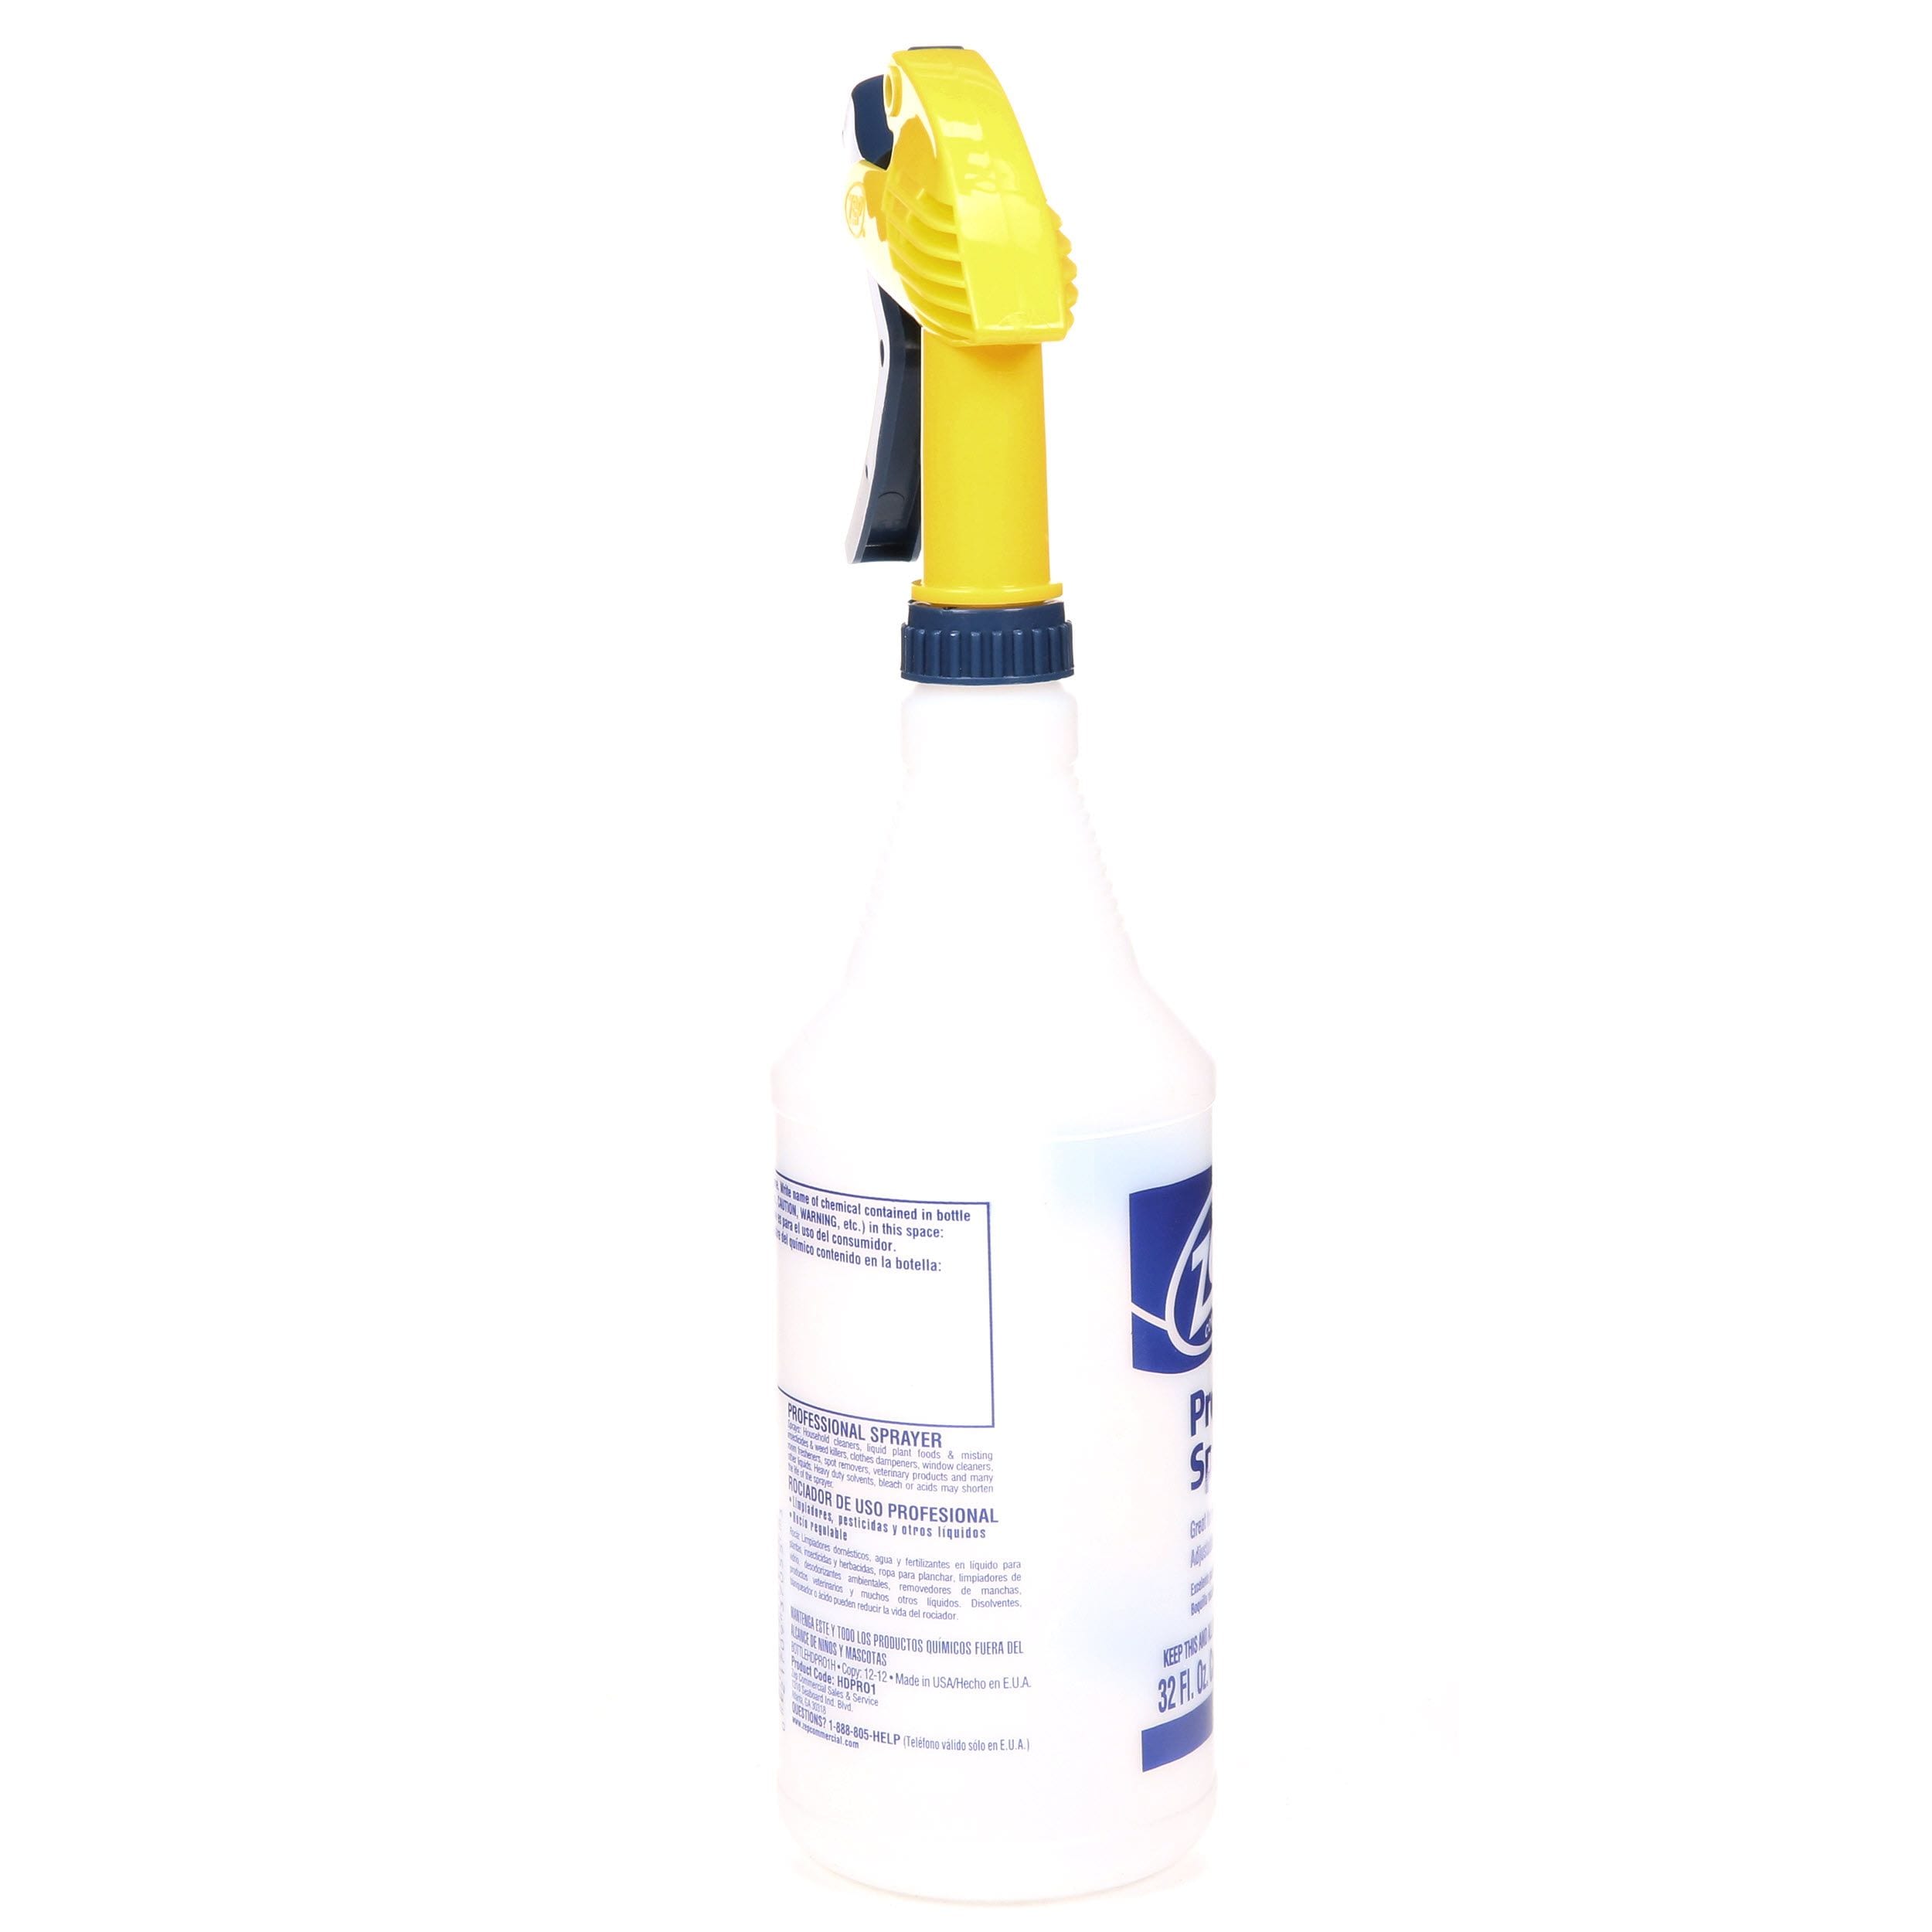 Spray Bottle Hand Pressure Trigger Sprayer Plastic Nozzle for Moistening Plants Flowers Cleaning Essential Oil Water Kitchen Bath Beauty Hair Voberry Spray Bottle Brown 